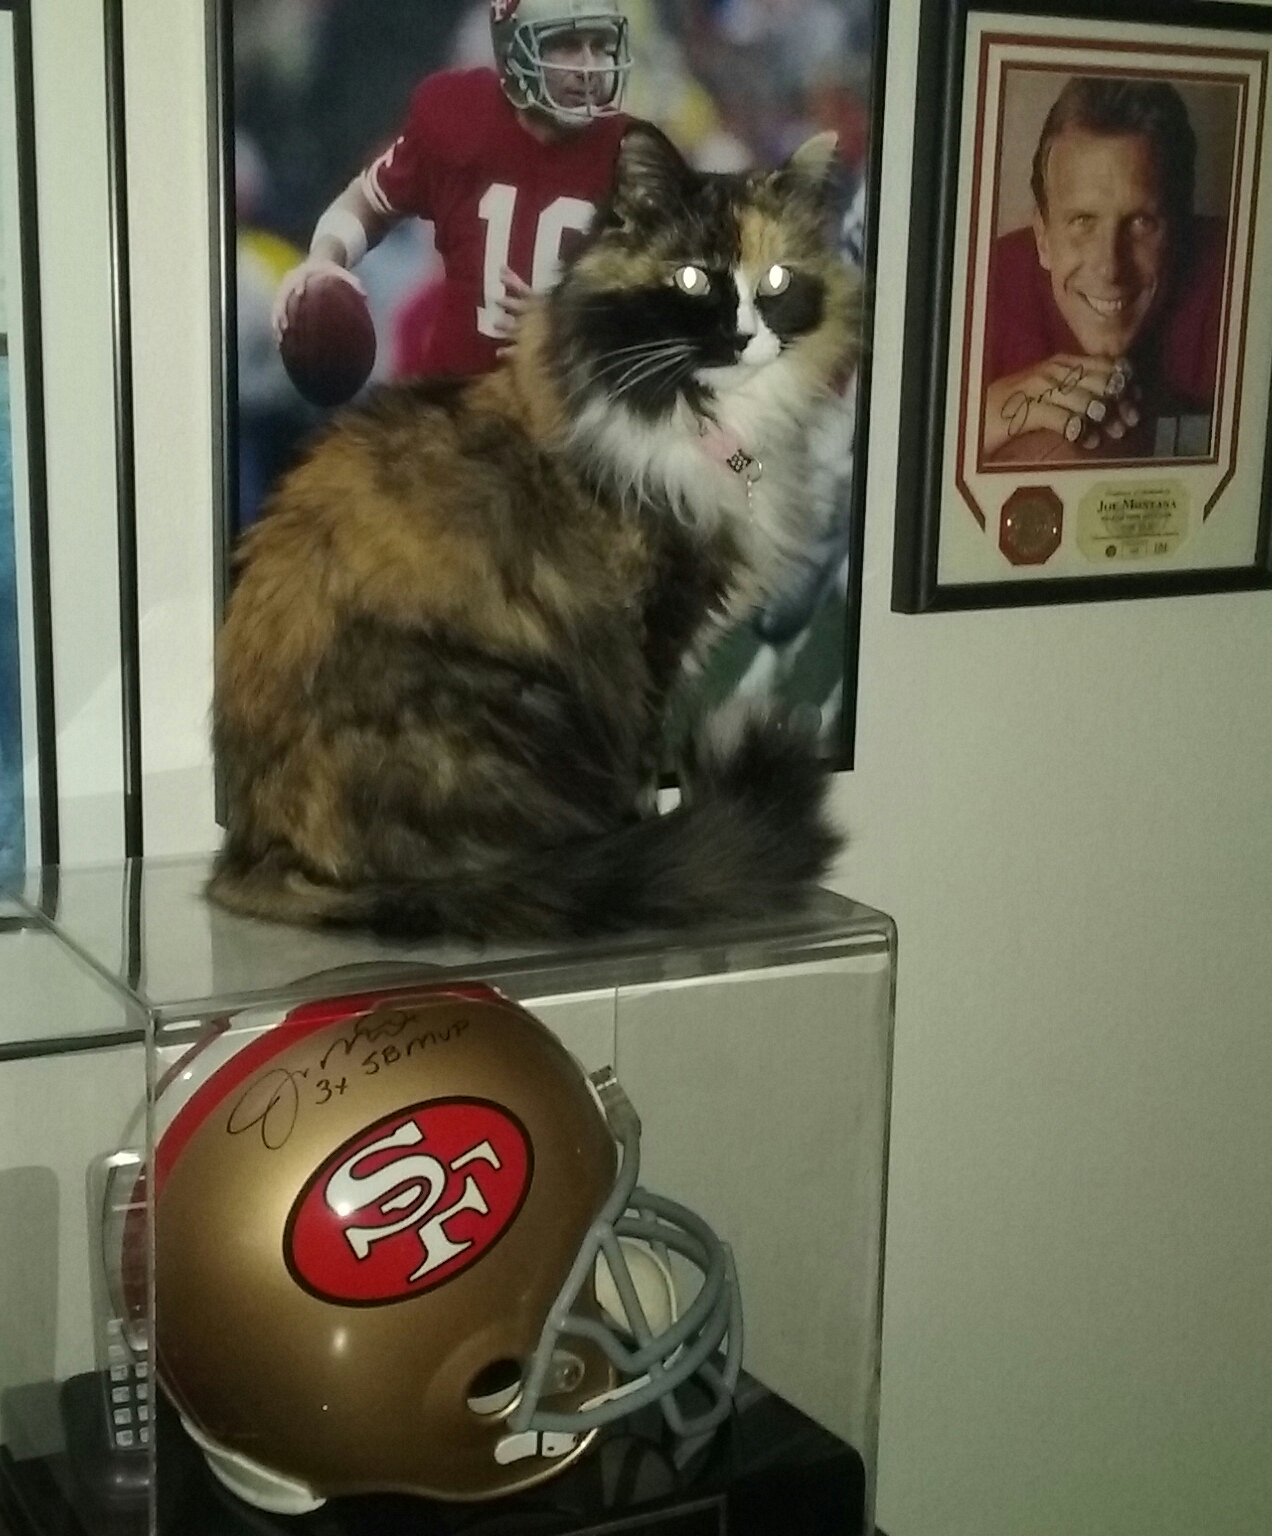 She's guarding my Joe Montana helmet...